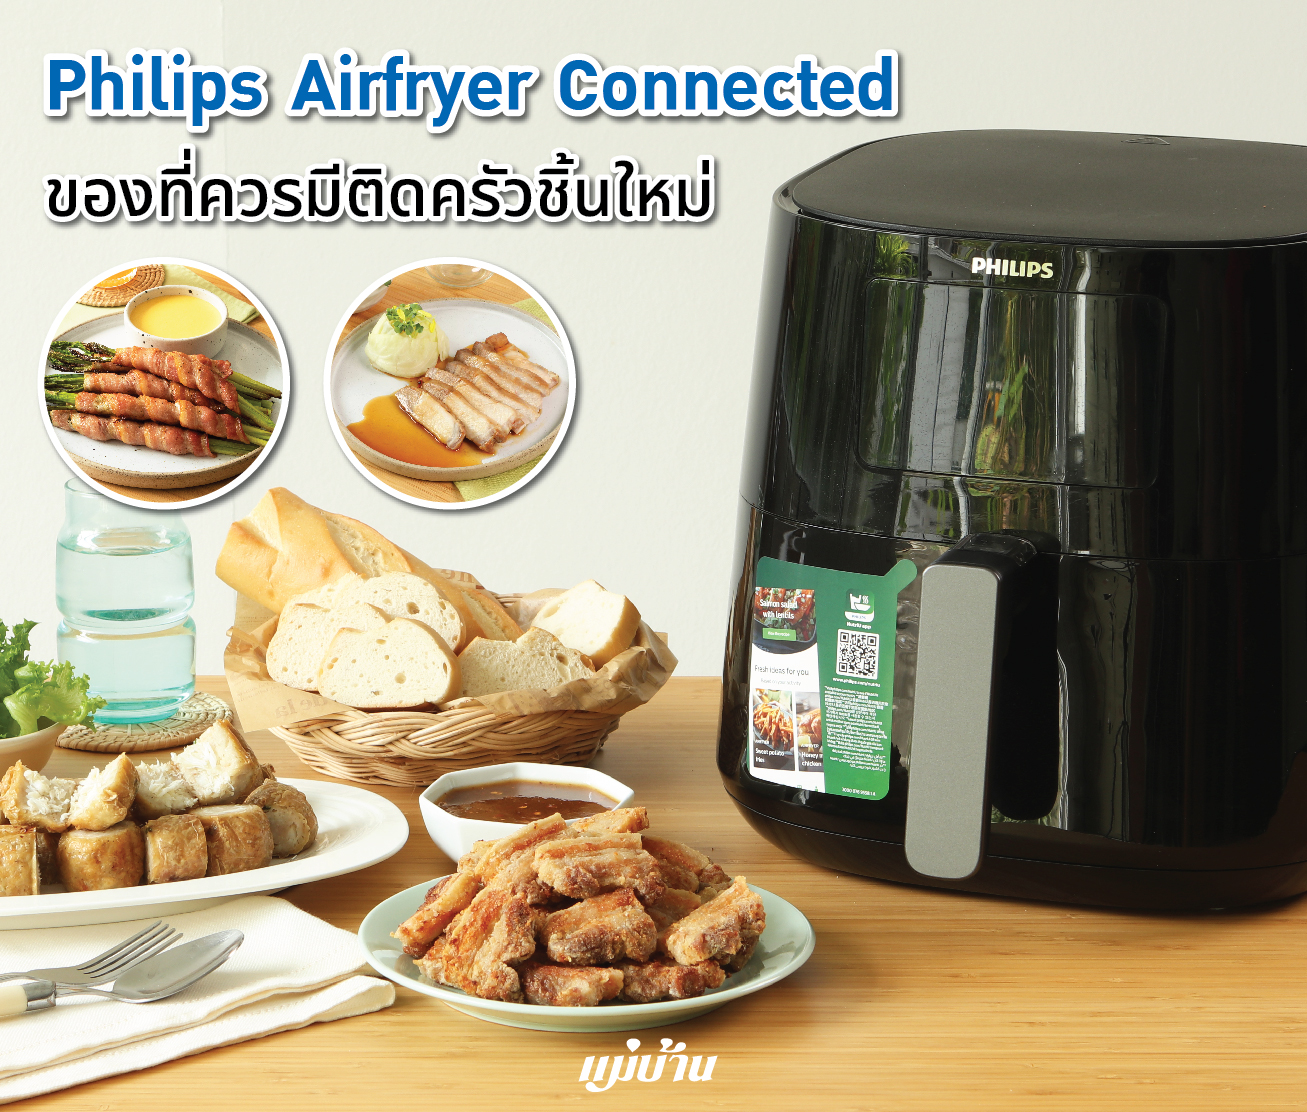 Philips Airfryer Connected ของที่ควรมีติดครัวชิ้นใหม่ สำนักพิมพ์แม่บ้าน